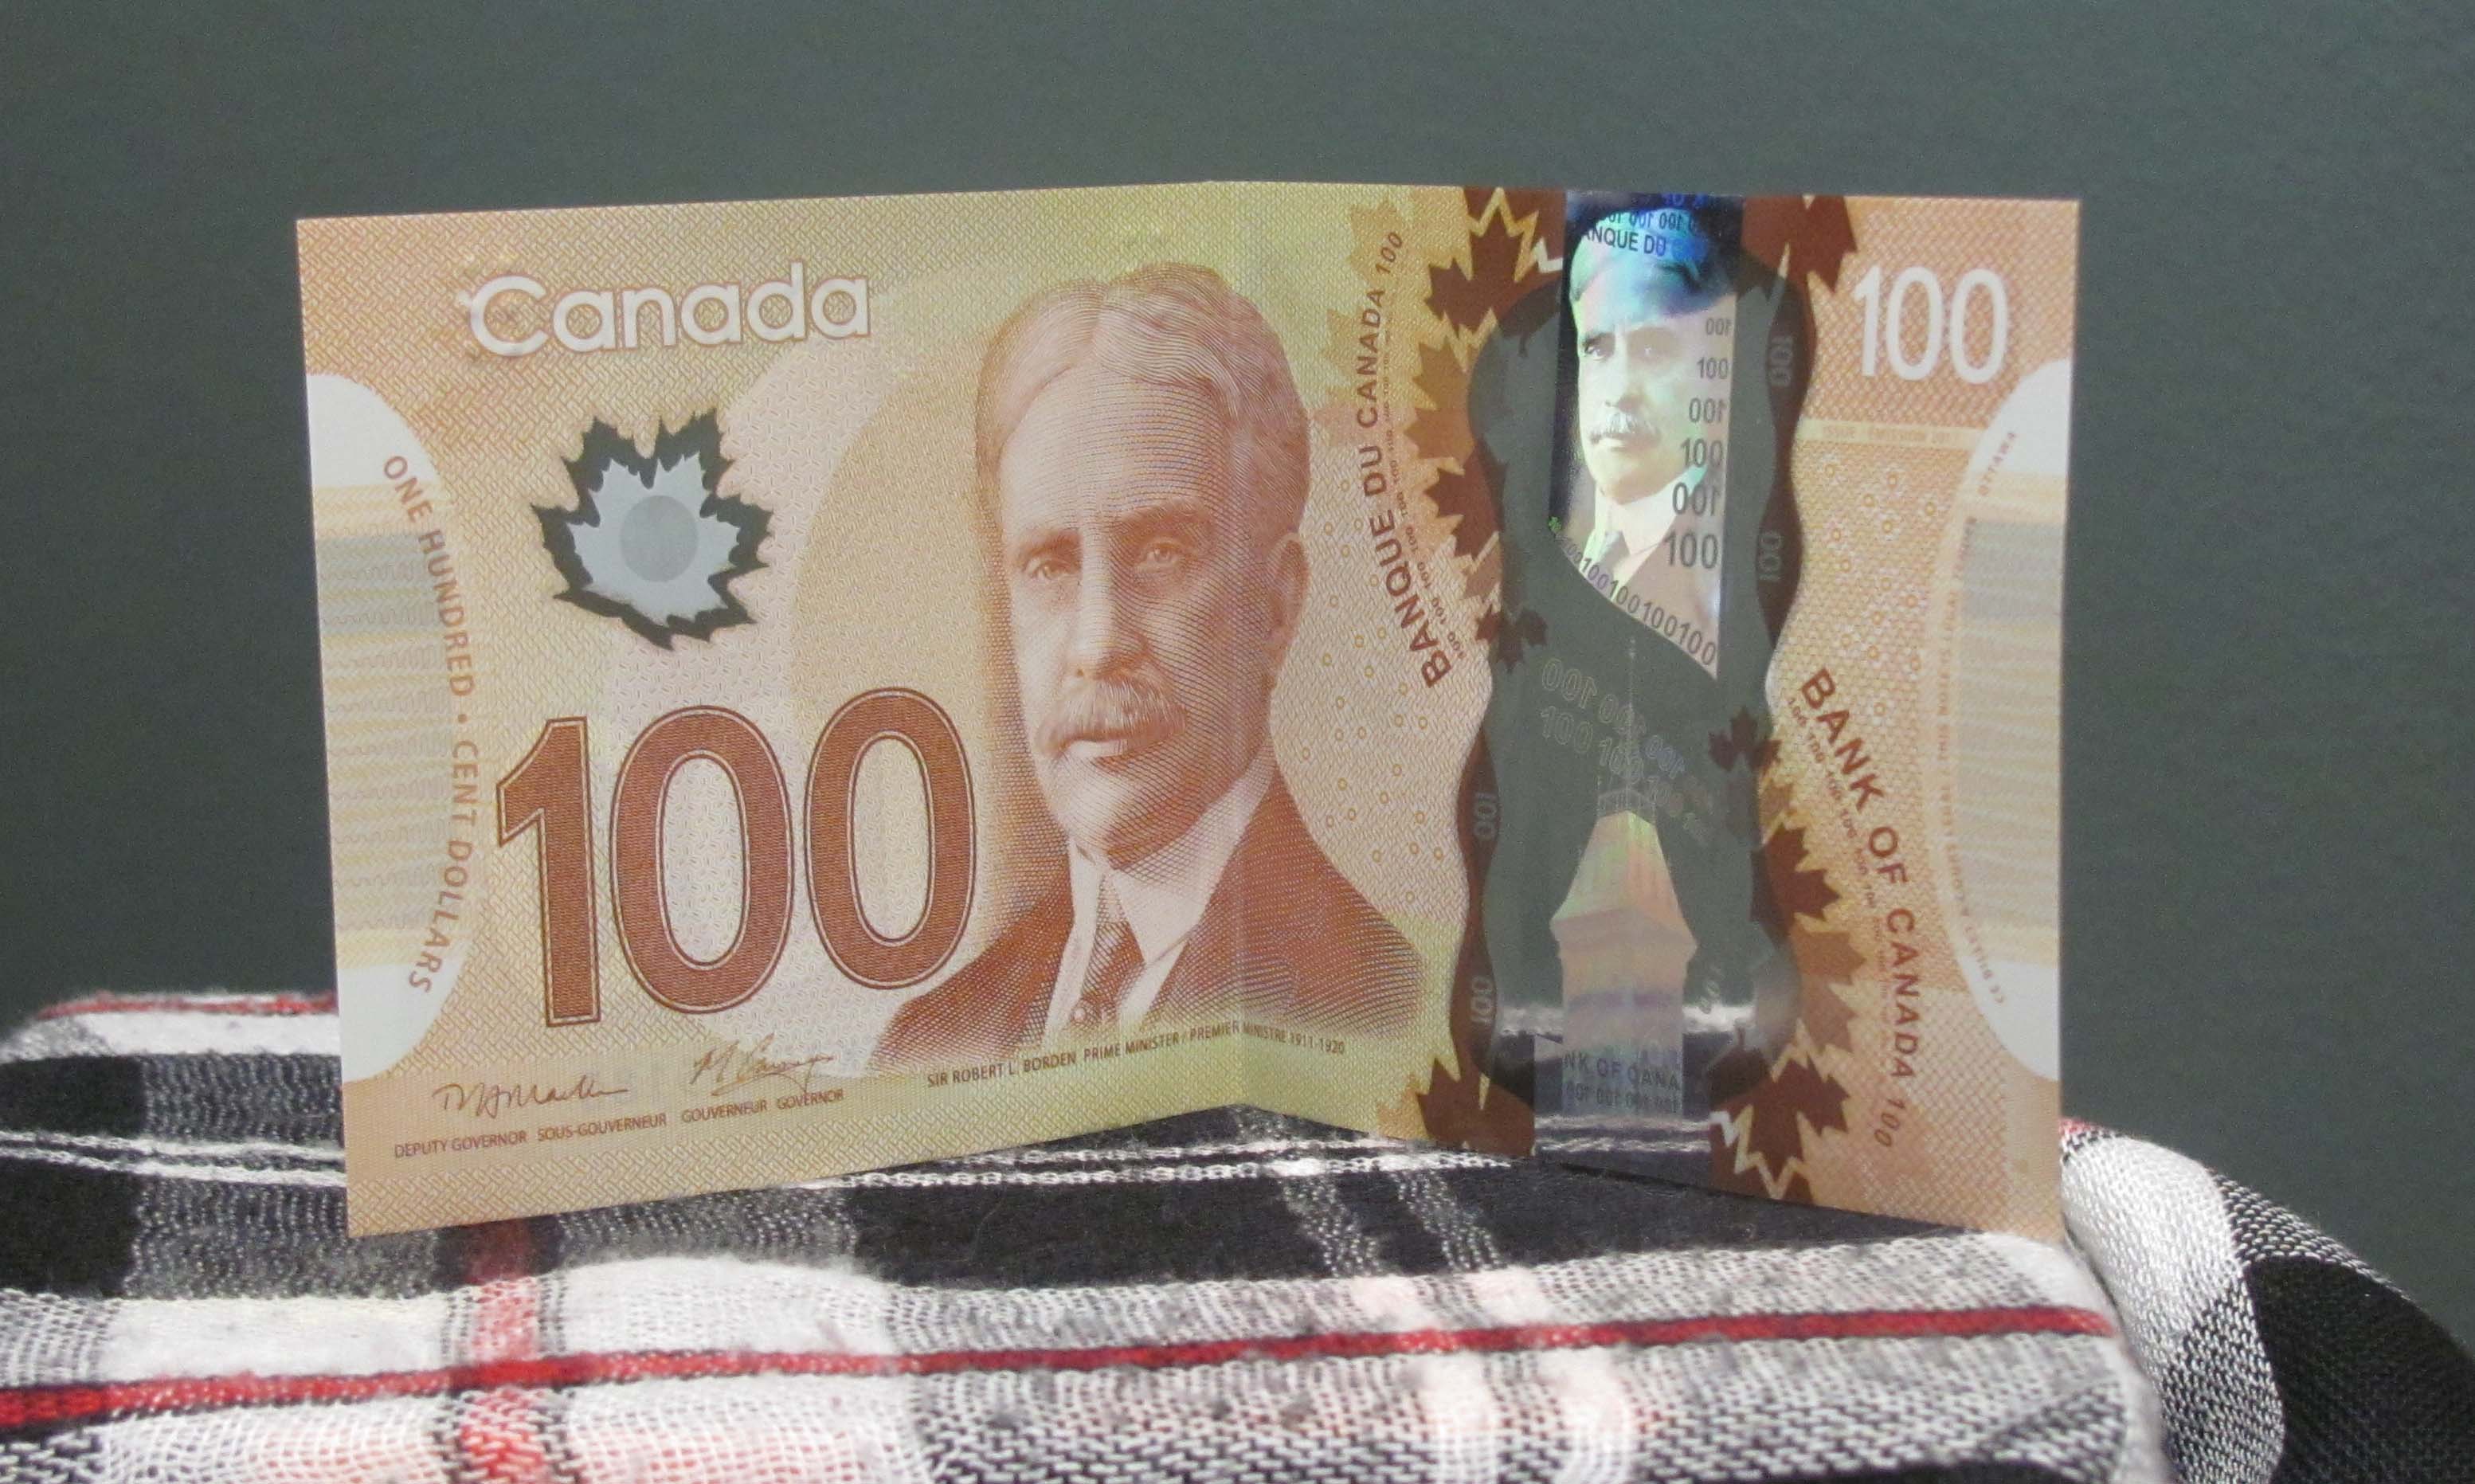 money-nw-new-canadian-100-dollar-bills-nov-14-2011-2.jpg